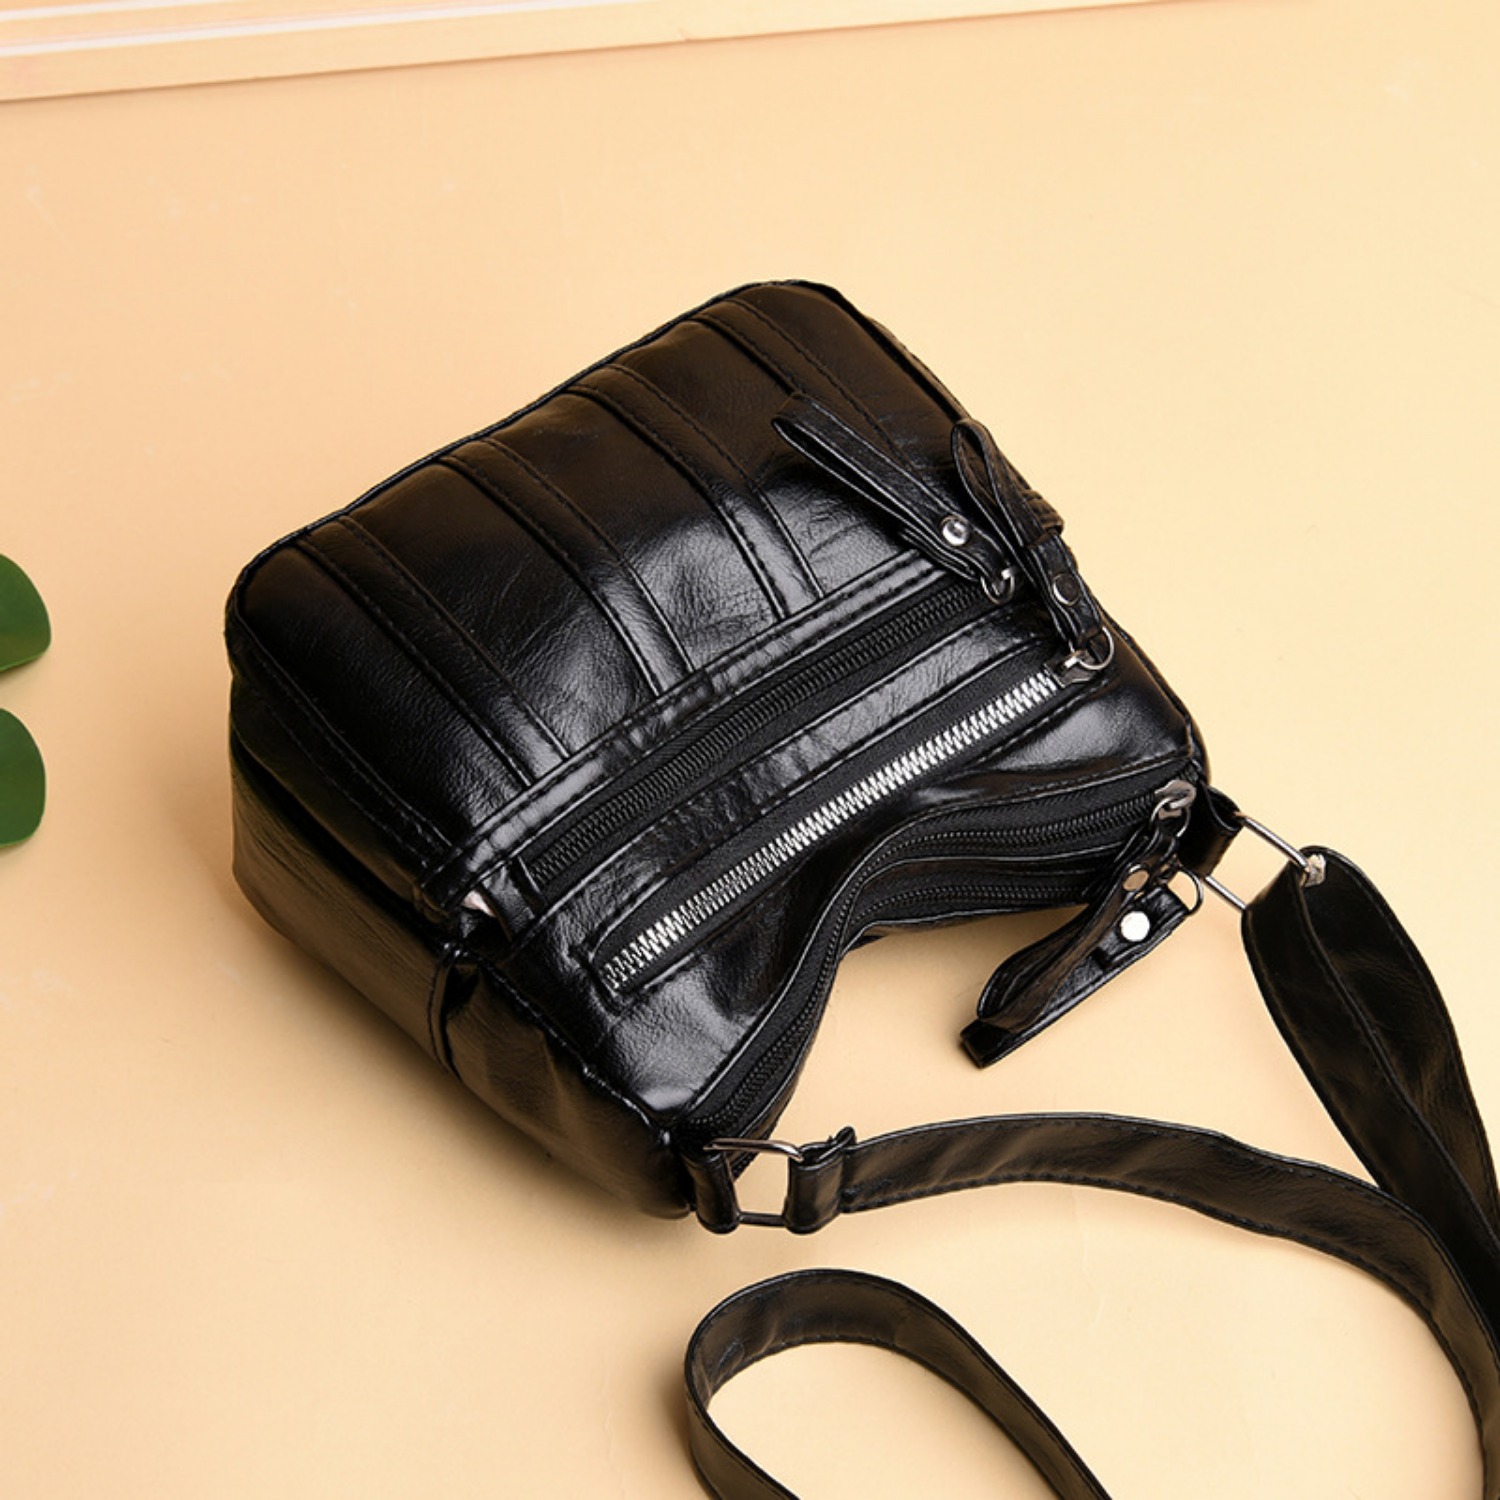 retro crossbody bag for women soft pu leather shoulder bag multi pockets purse with zipper